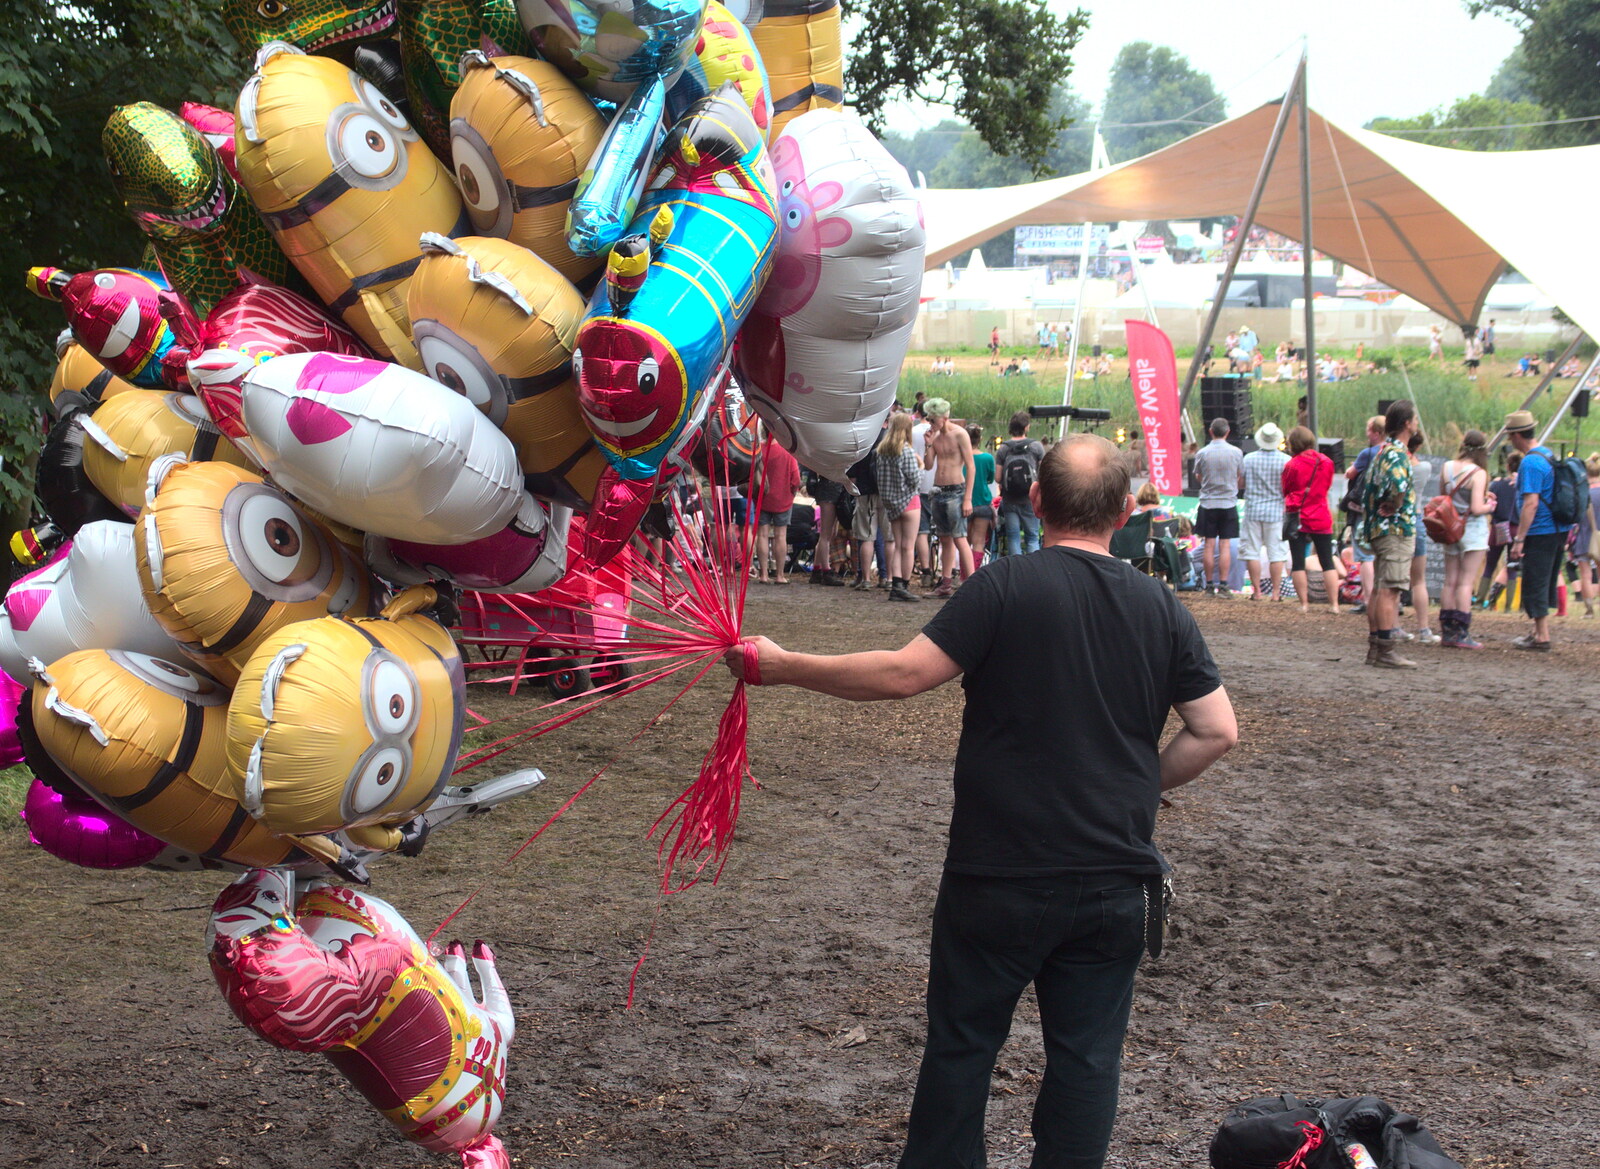 A bloke hauls balloons around from Latitude Festival, Henham Park, Southwold, Suffolk - 17th July 2014